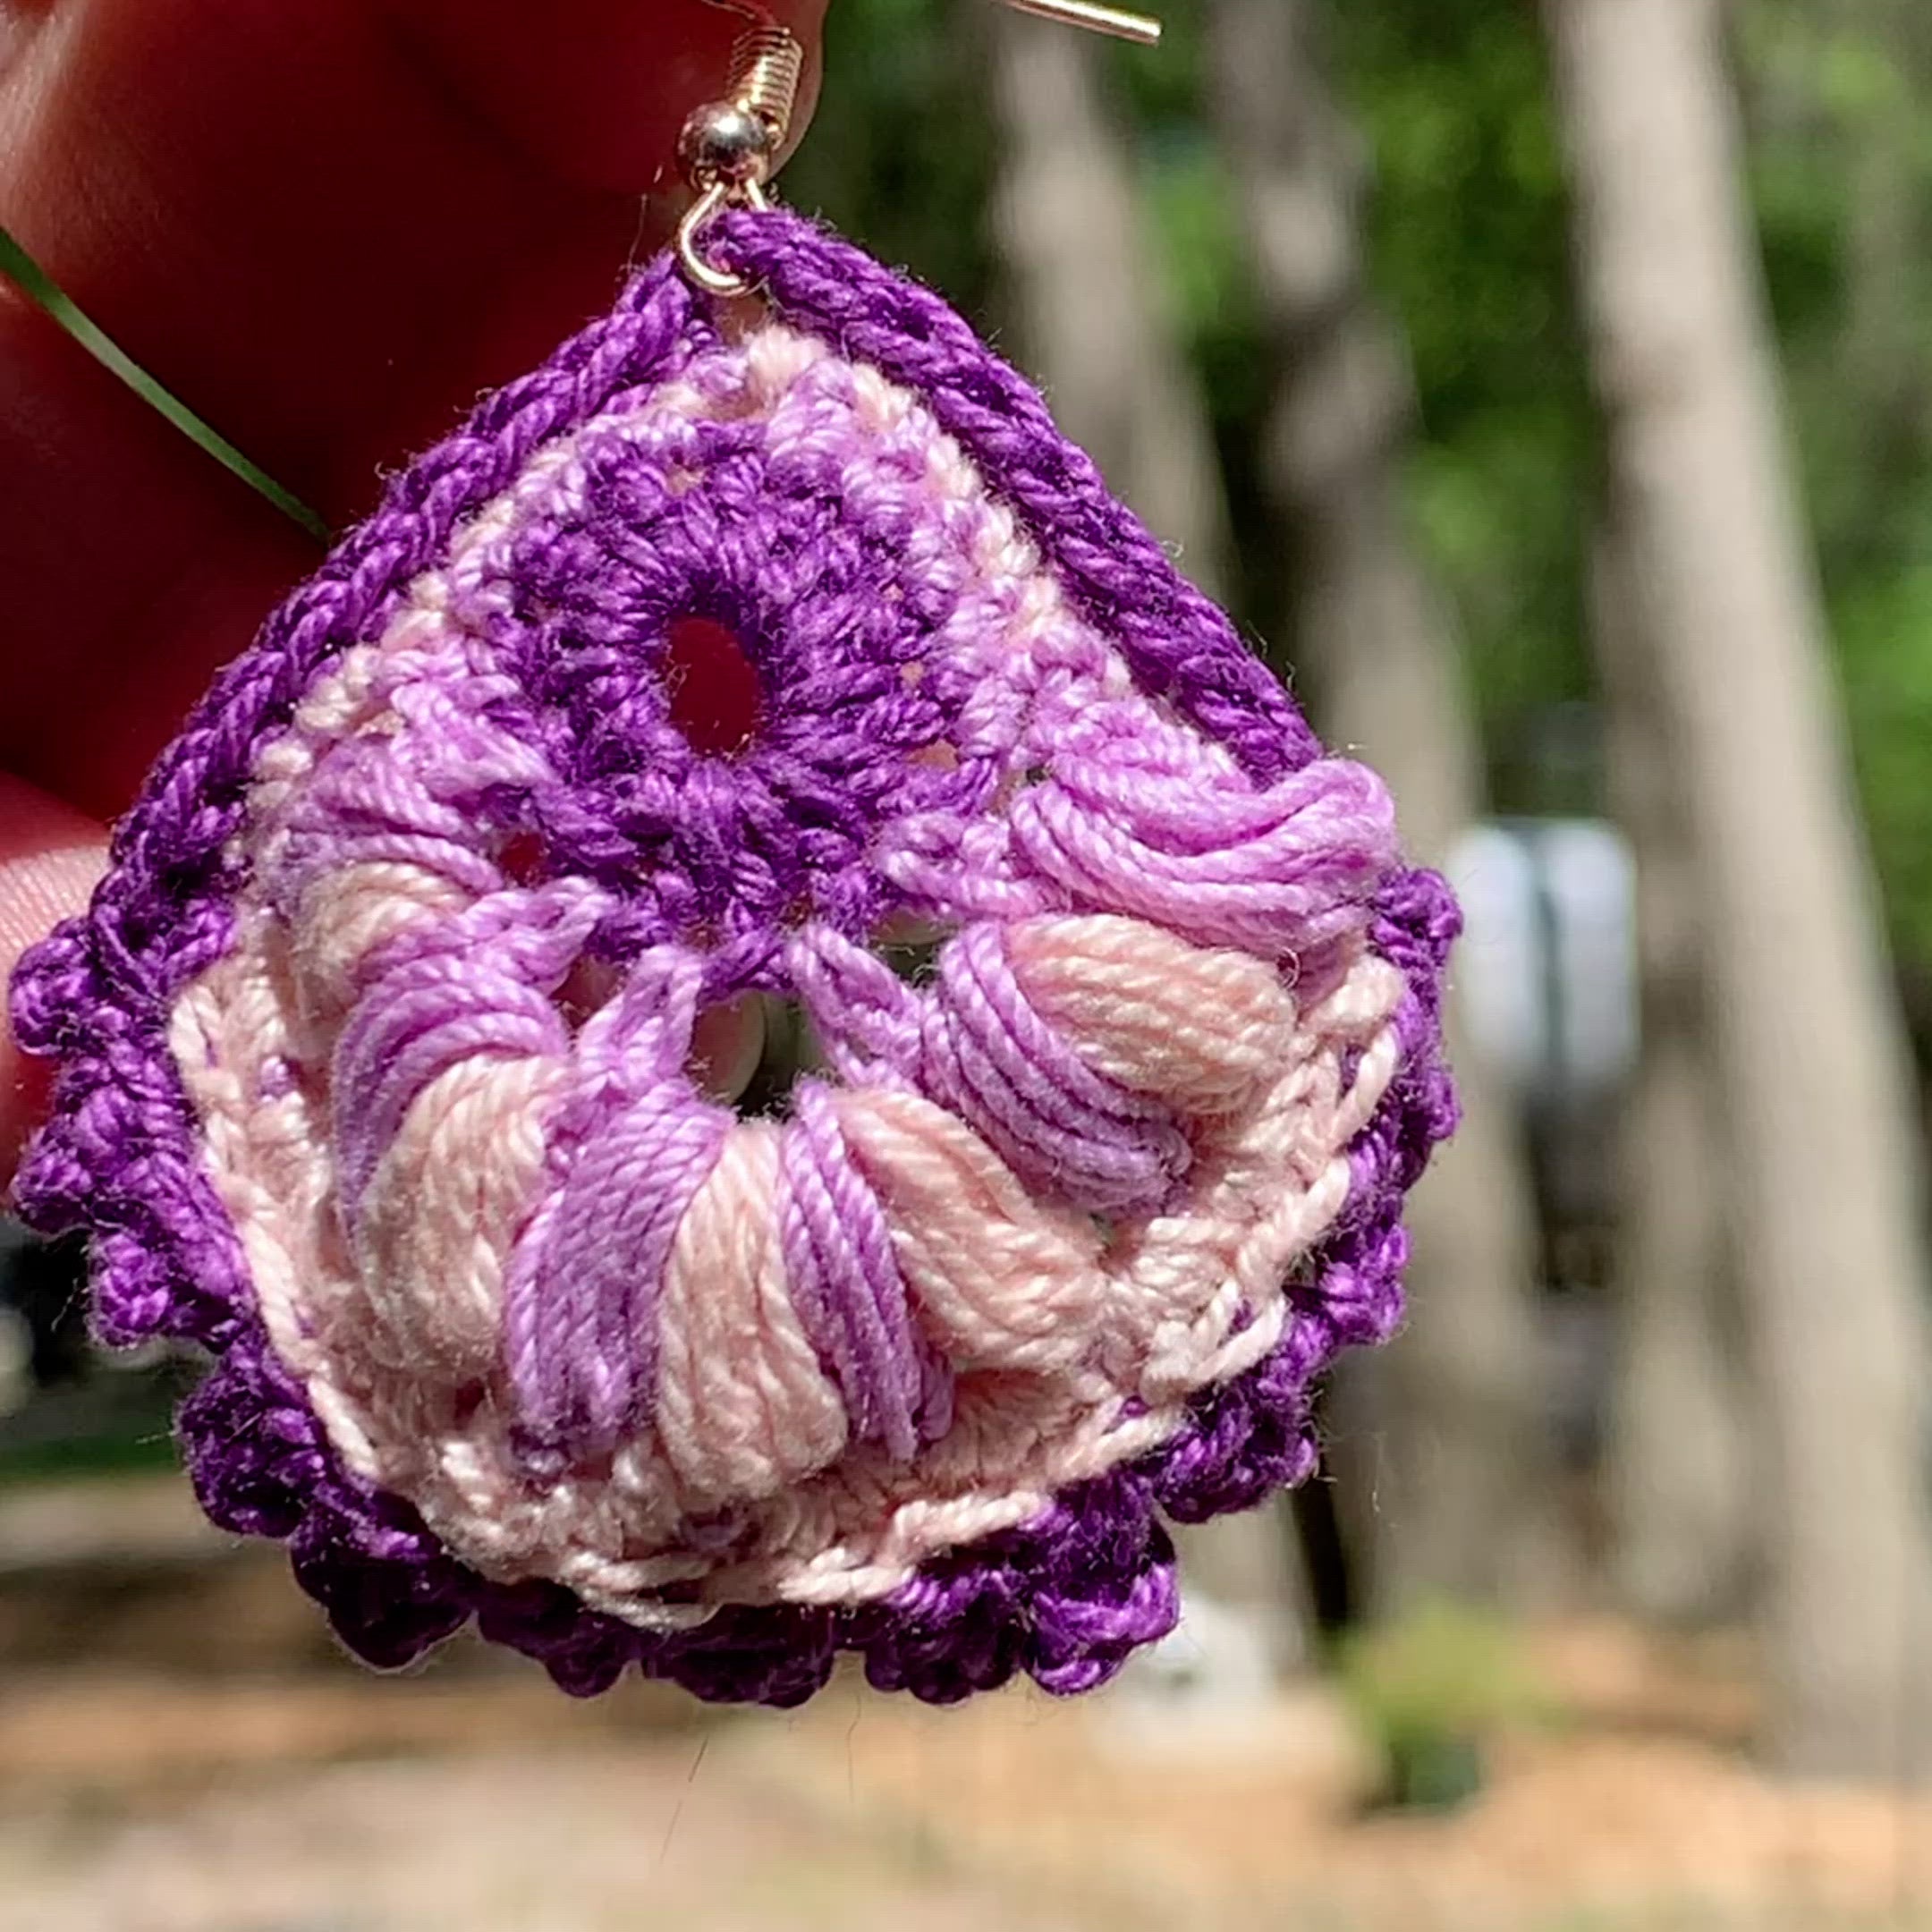 Purple Crocheted Earrings-Boho Style Shell shaped Earrings